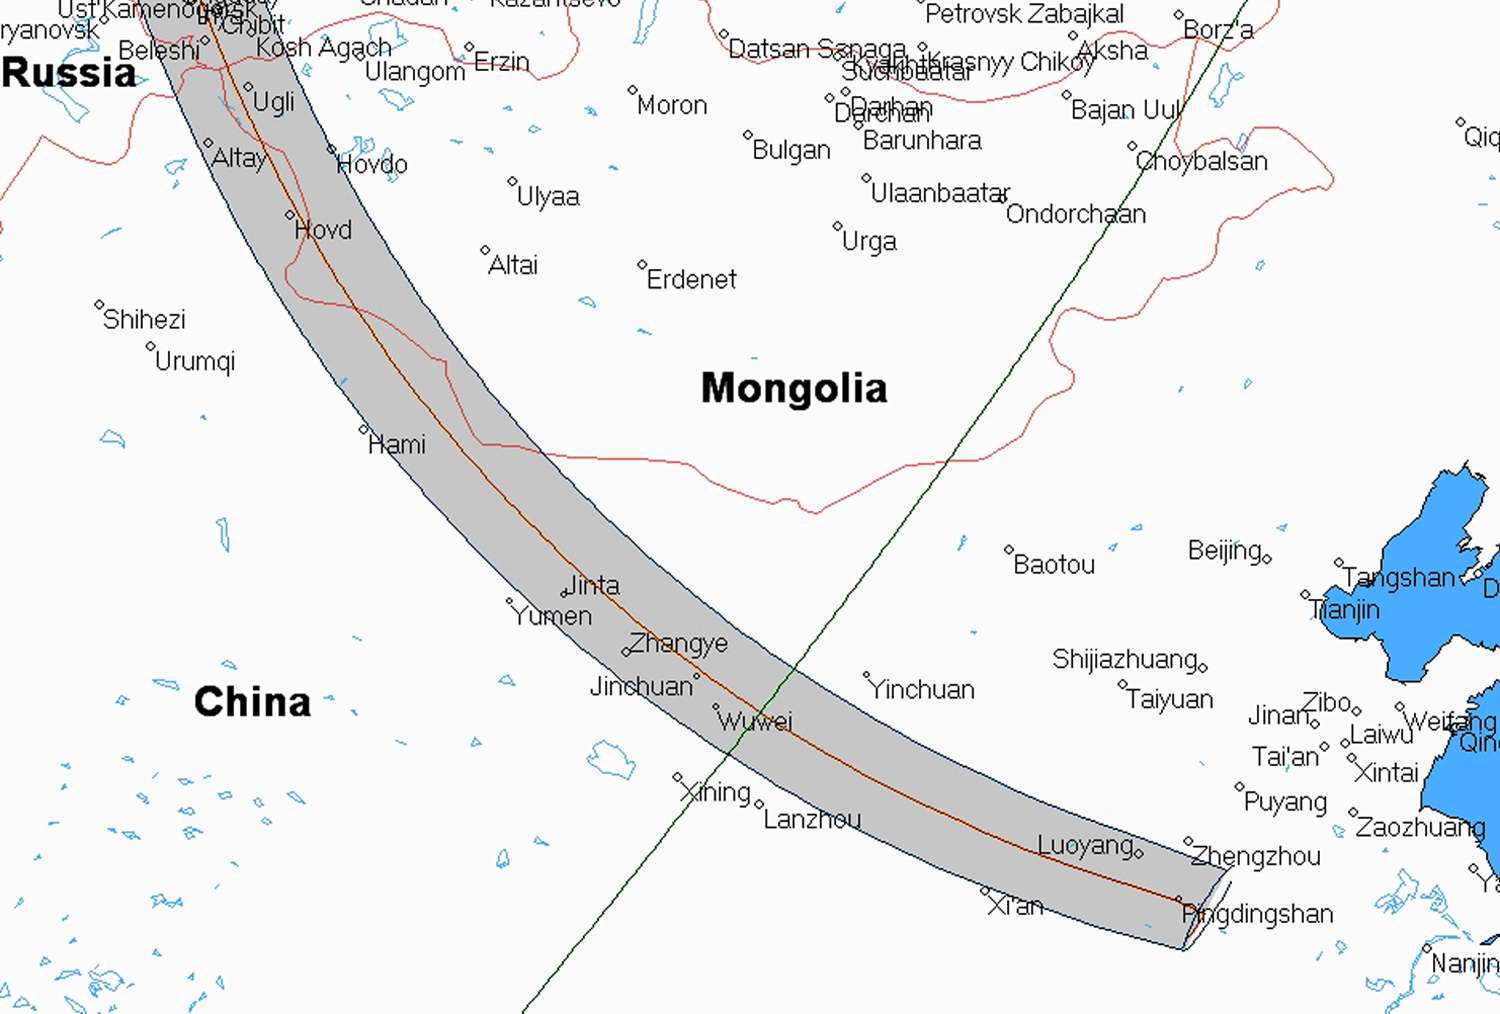 DSC_2336-2 - Path thru Mongolia and China.JPG